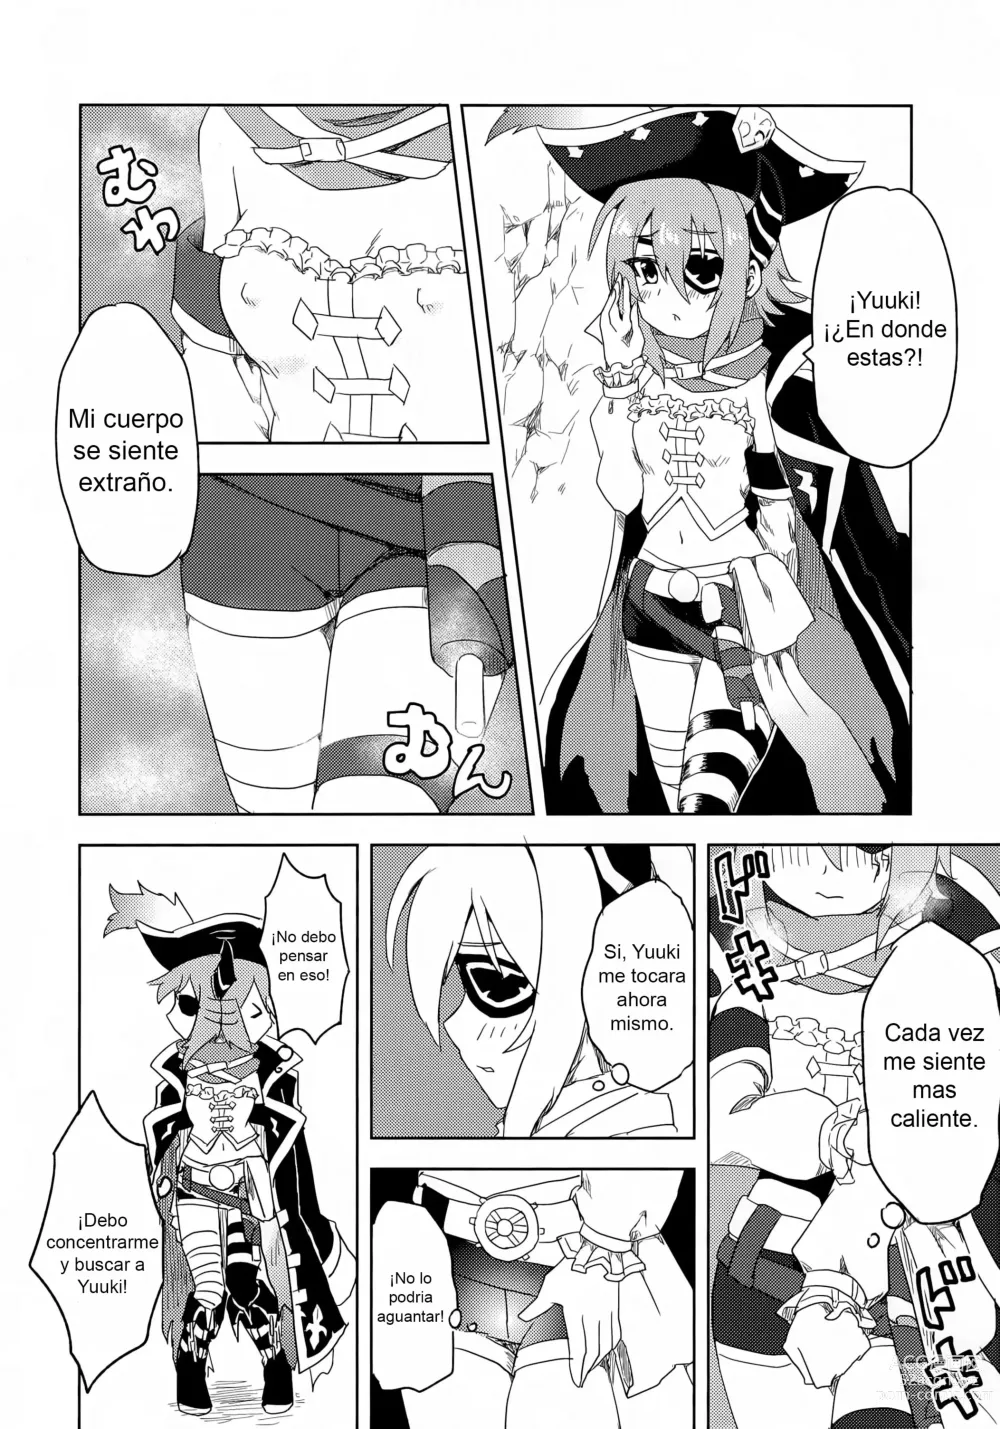 Page 7 of doujinshi Anna-chan to Ero Trap Dungeon